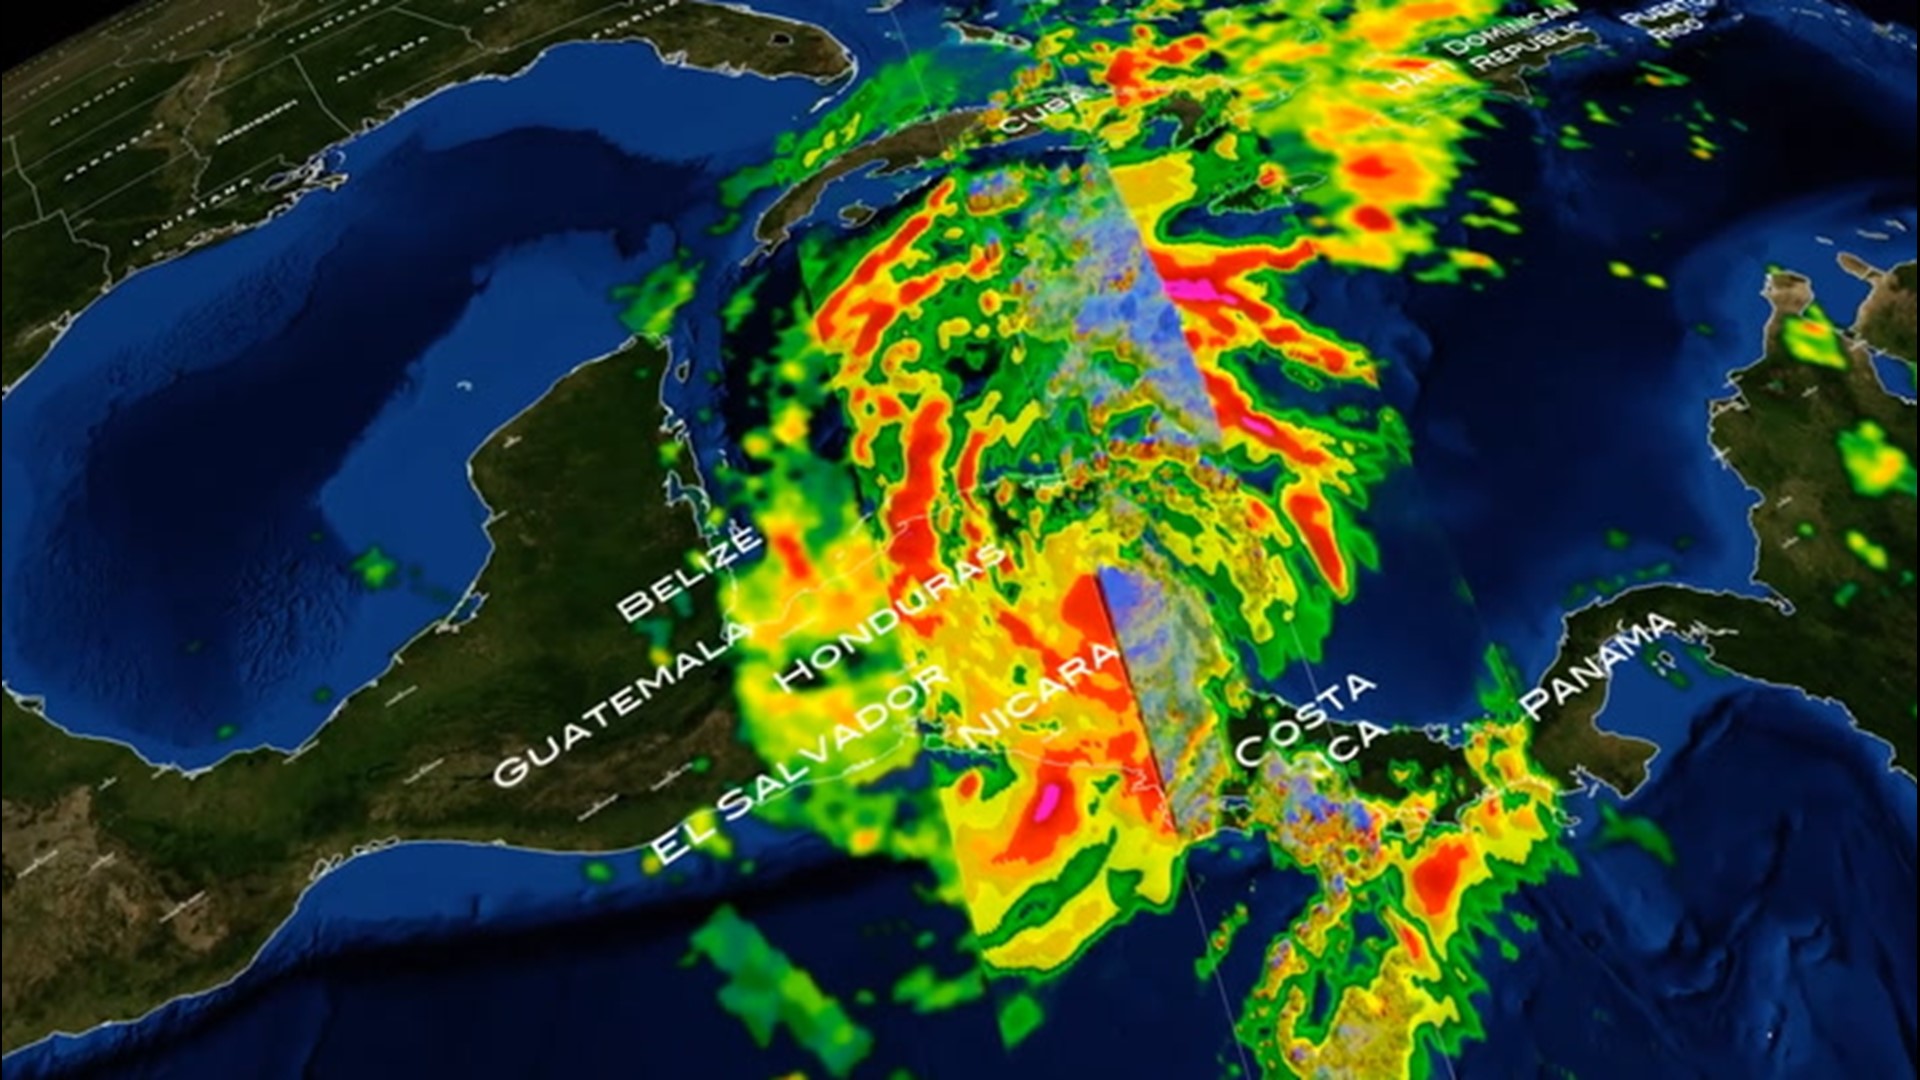 NASA's Global Precipitation Measurement Core Observatory satellite flew over Hurricane Eta on Nov. 4, capturing the storm's rainfall totals over Central America.